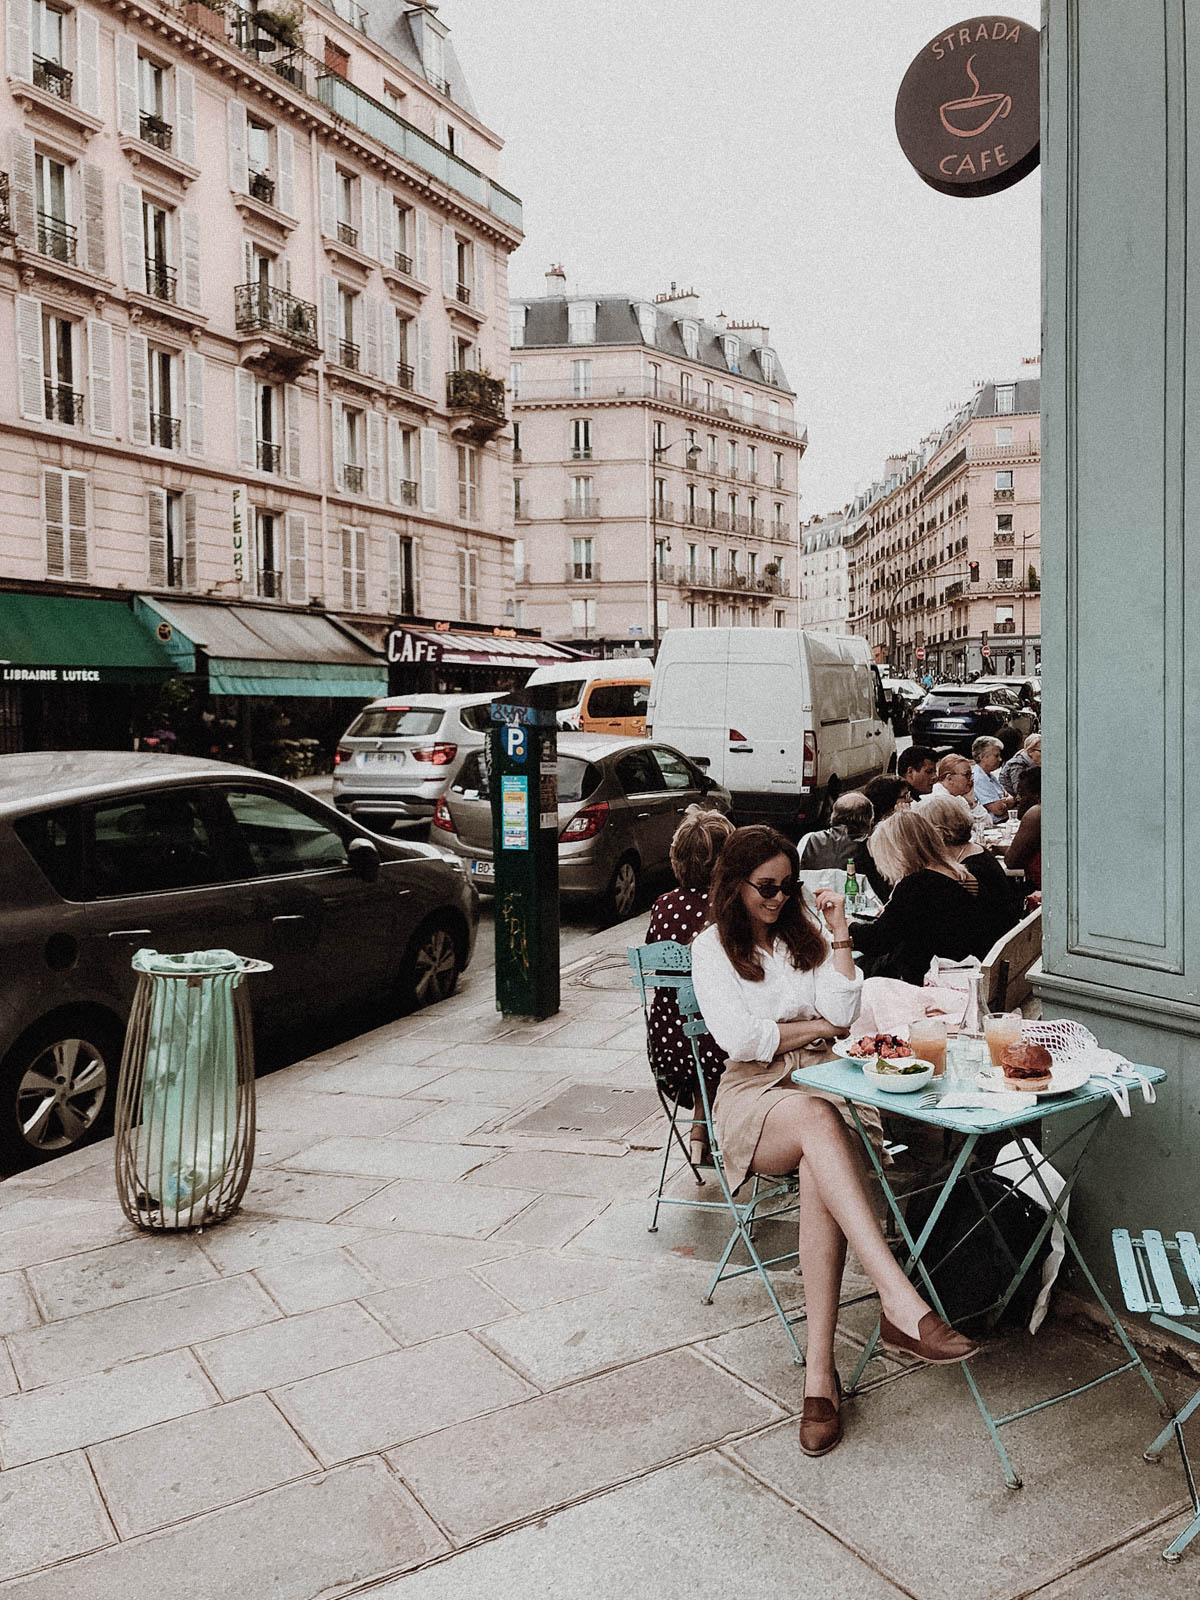 Paris France Travel Guide - Cafe Strada, Street Photography / RG Daily Blog